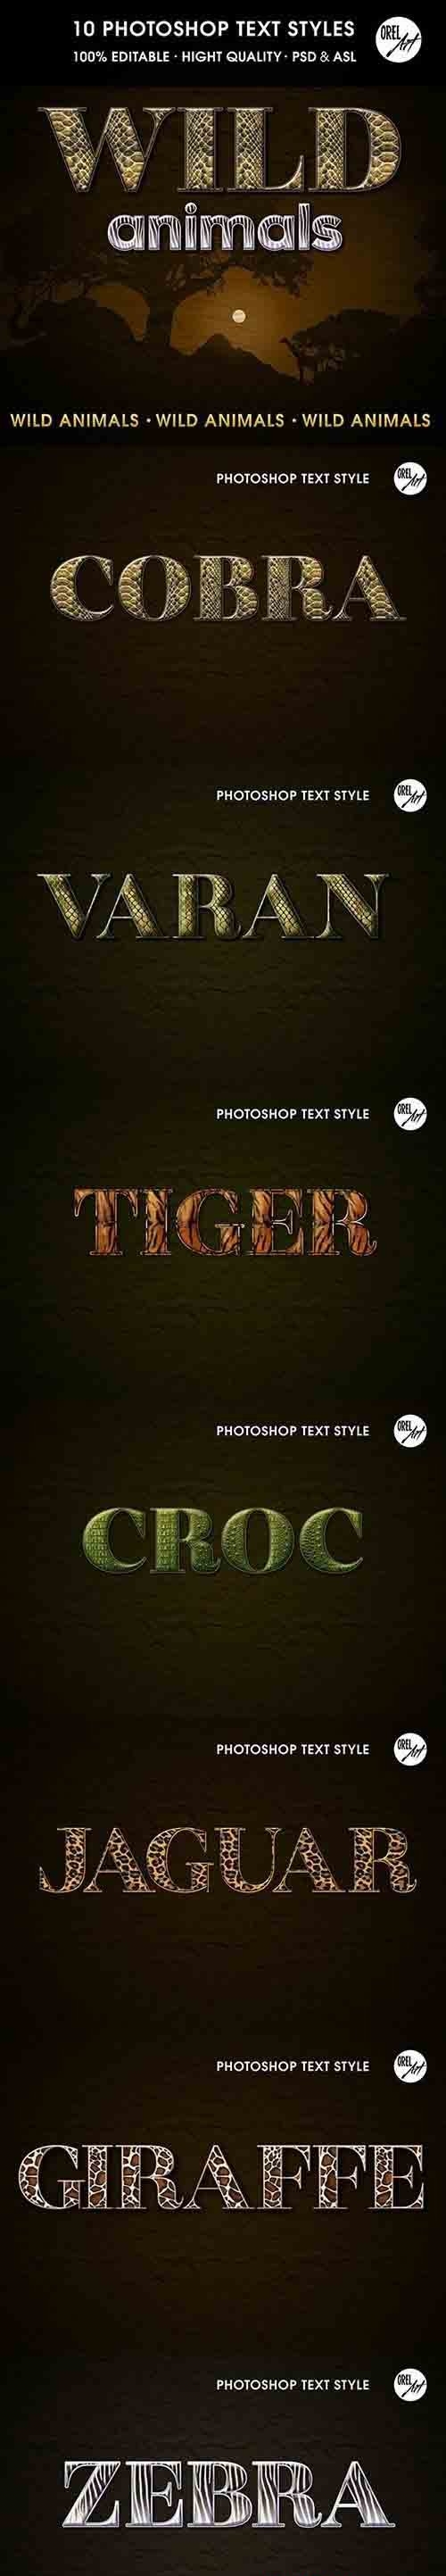 Download GraphicRiver - Wild Animals Text Styles 30385880 - DesireFX.COM